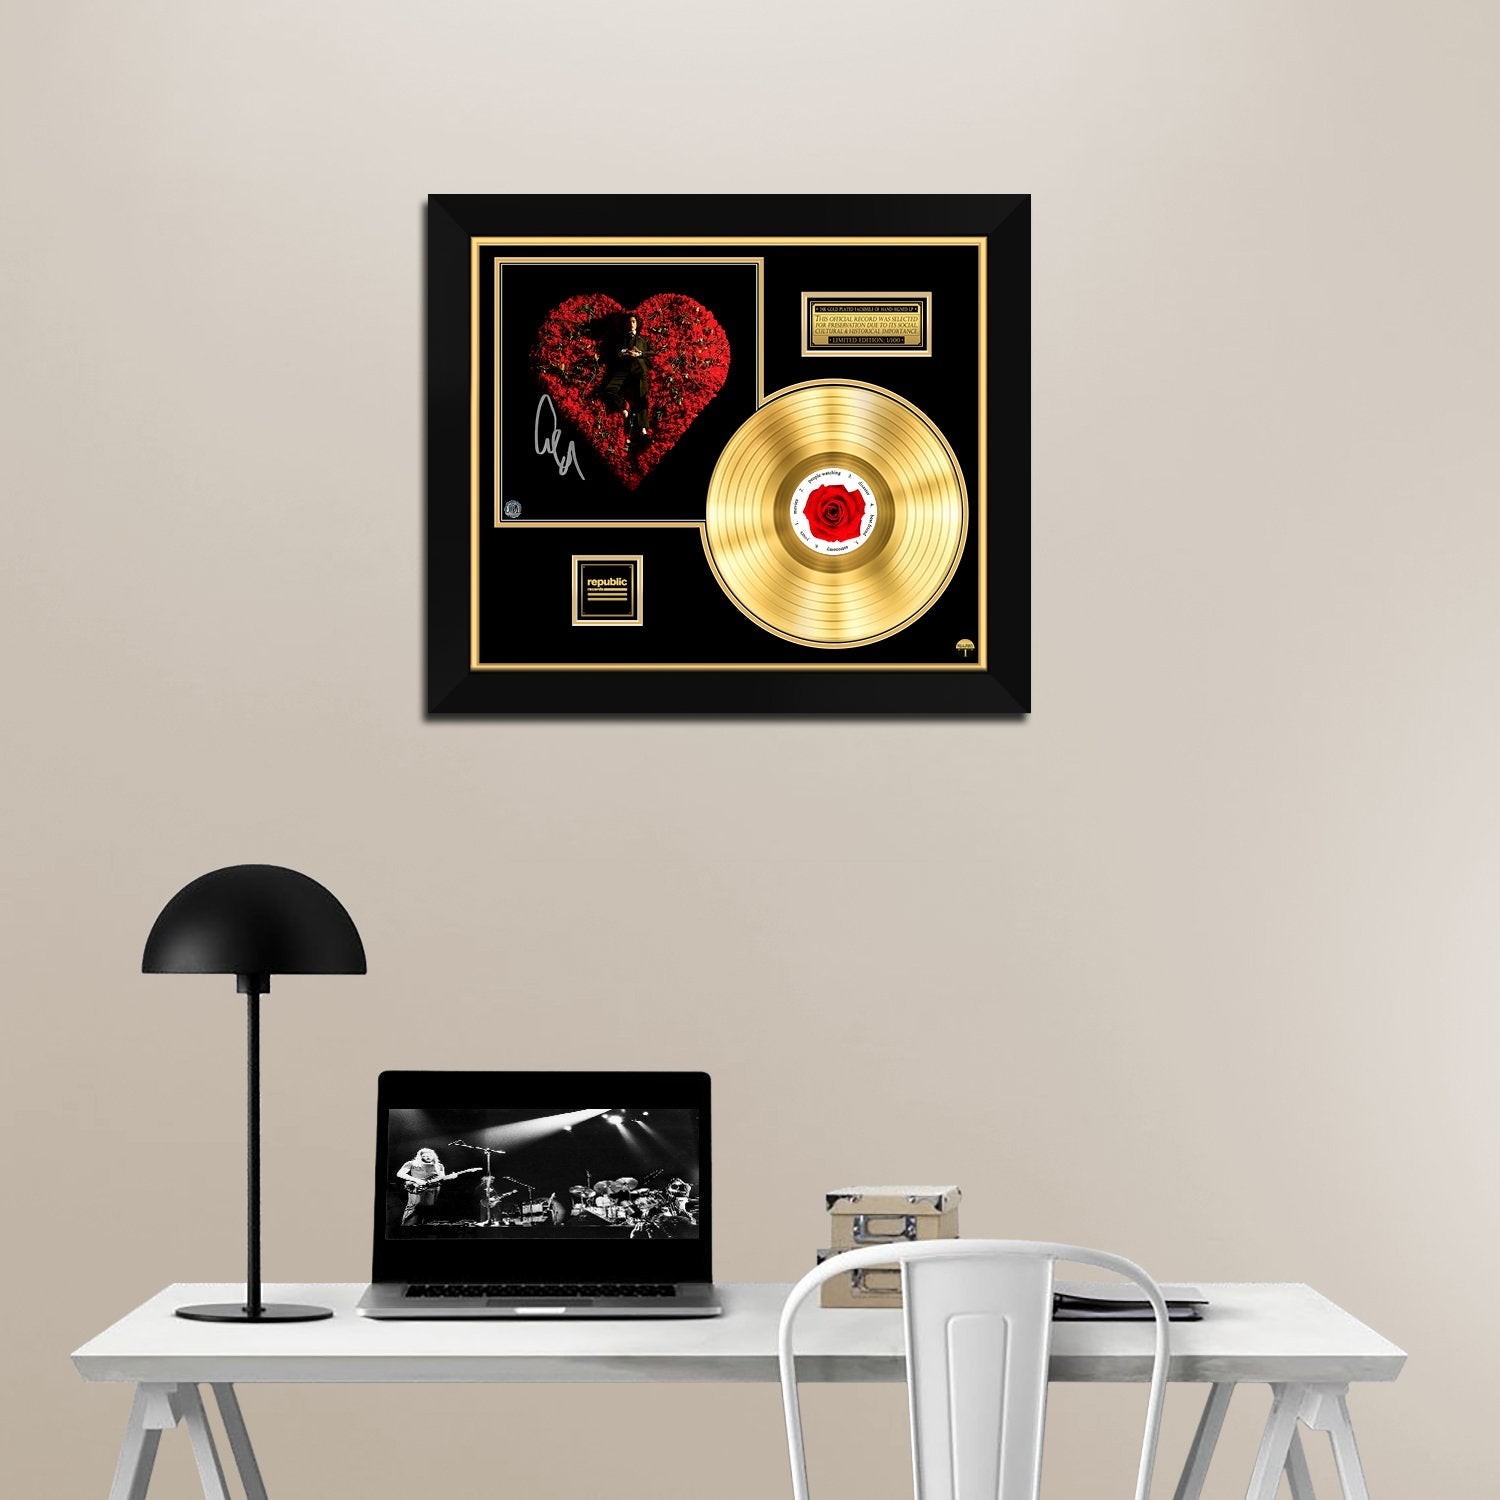 Conan Gray - Superache Gold LP Limited Signature Edition Custom